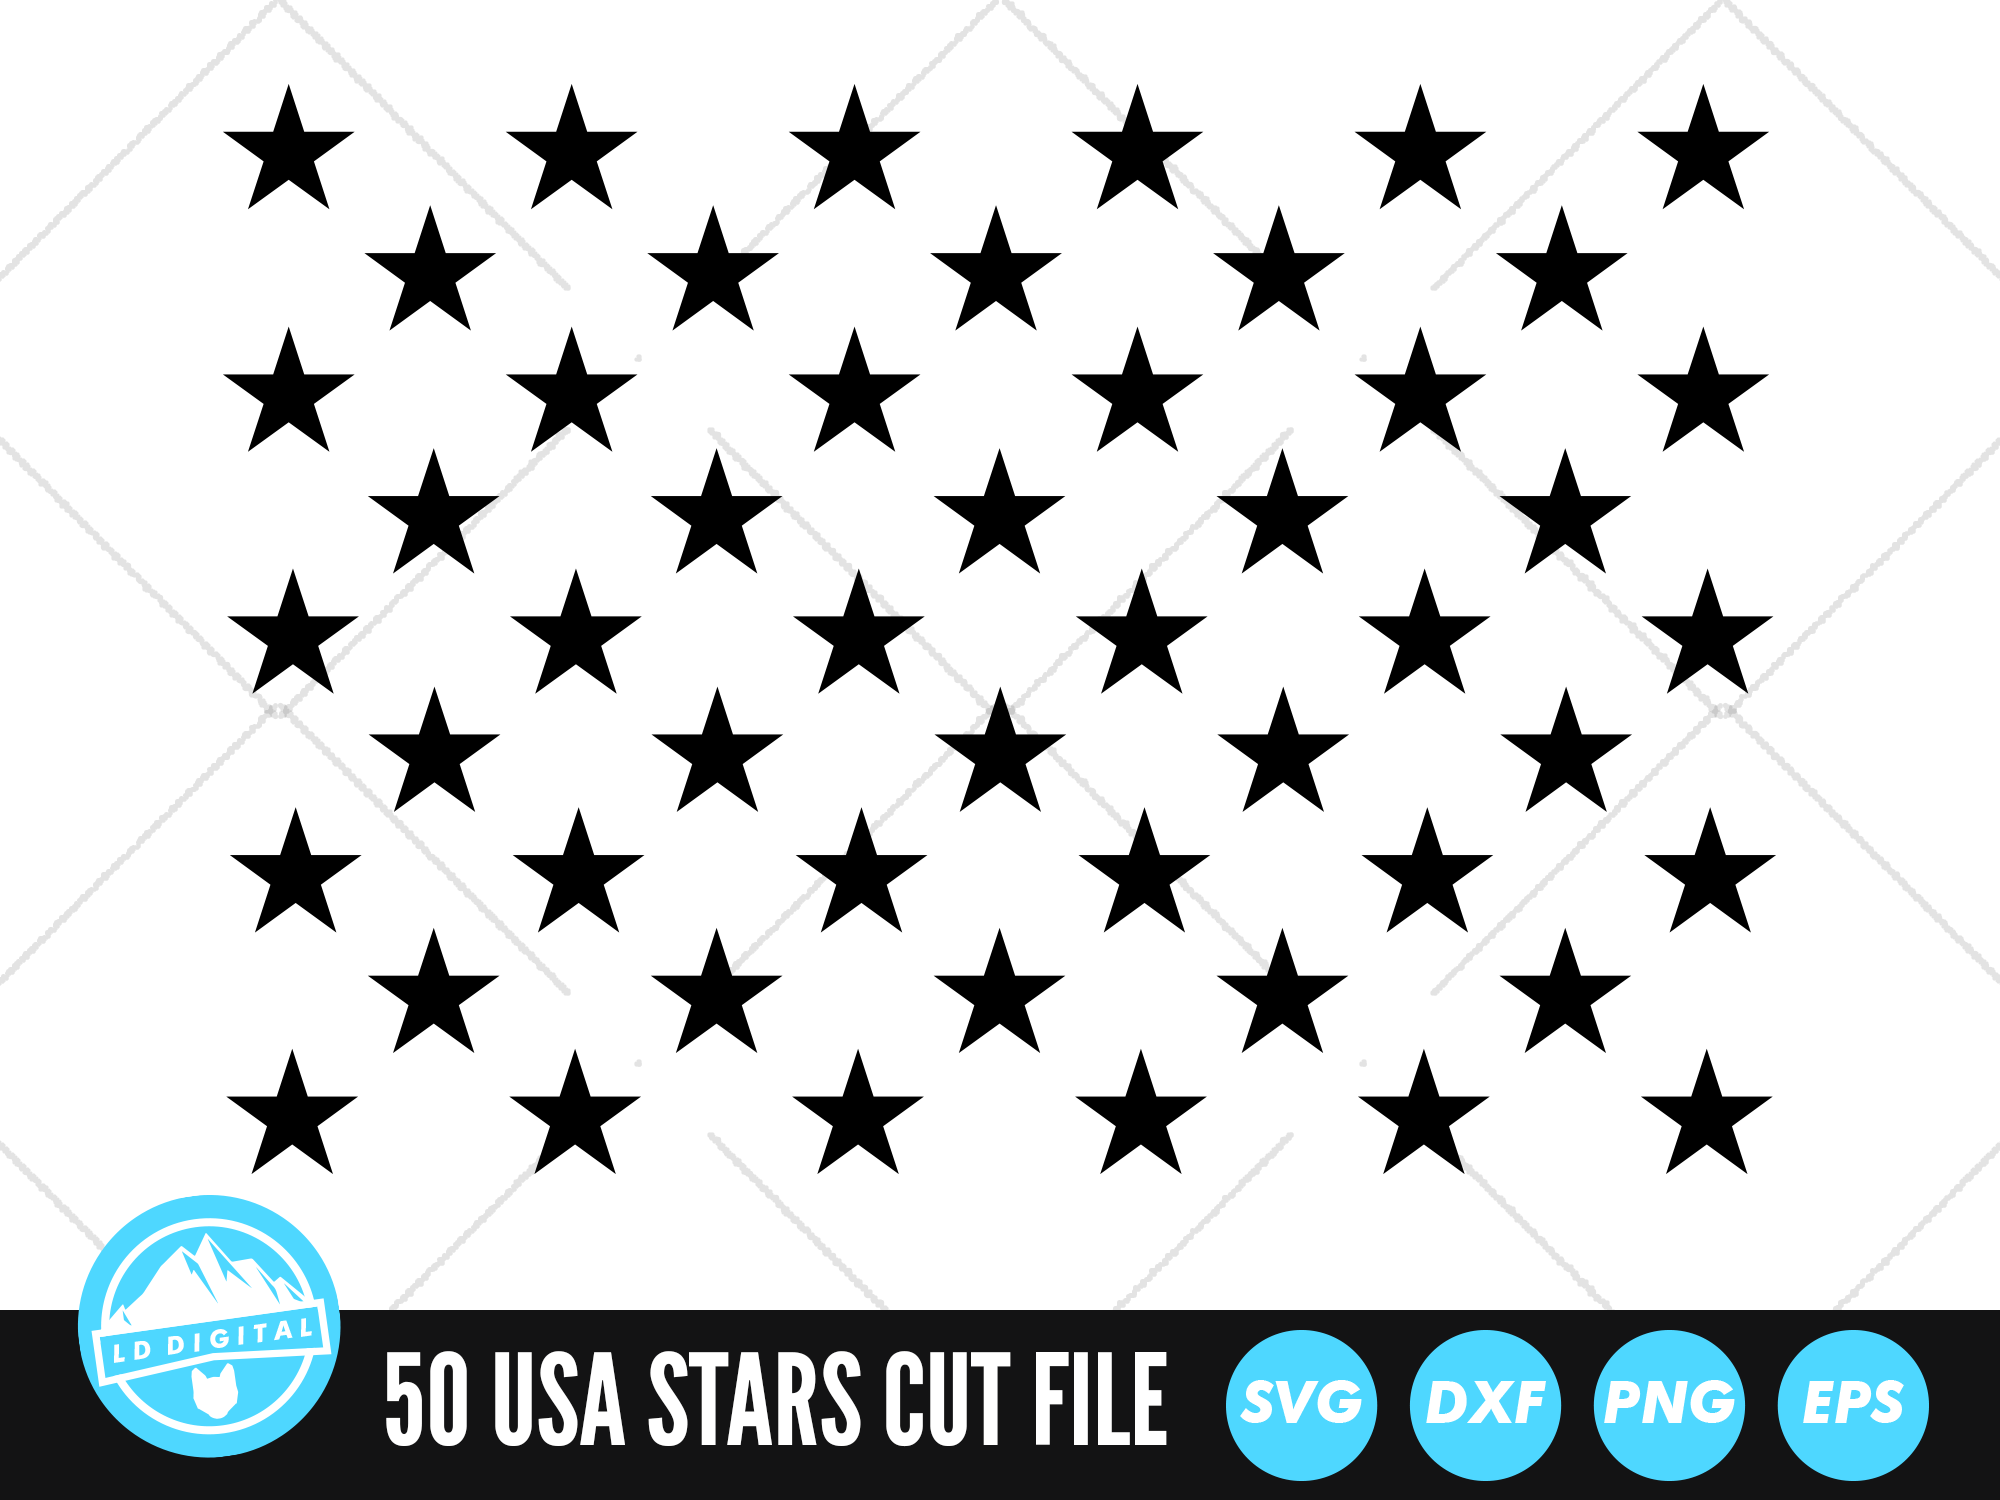 Download 50 Usa Stars Svg Files 50 State Stars Cut Files American Flag Star By Ld Digital Thehungryjpeg Com